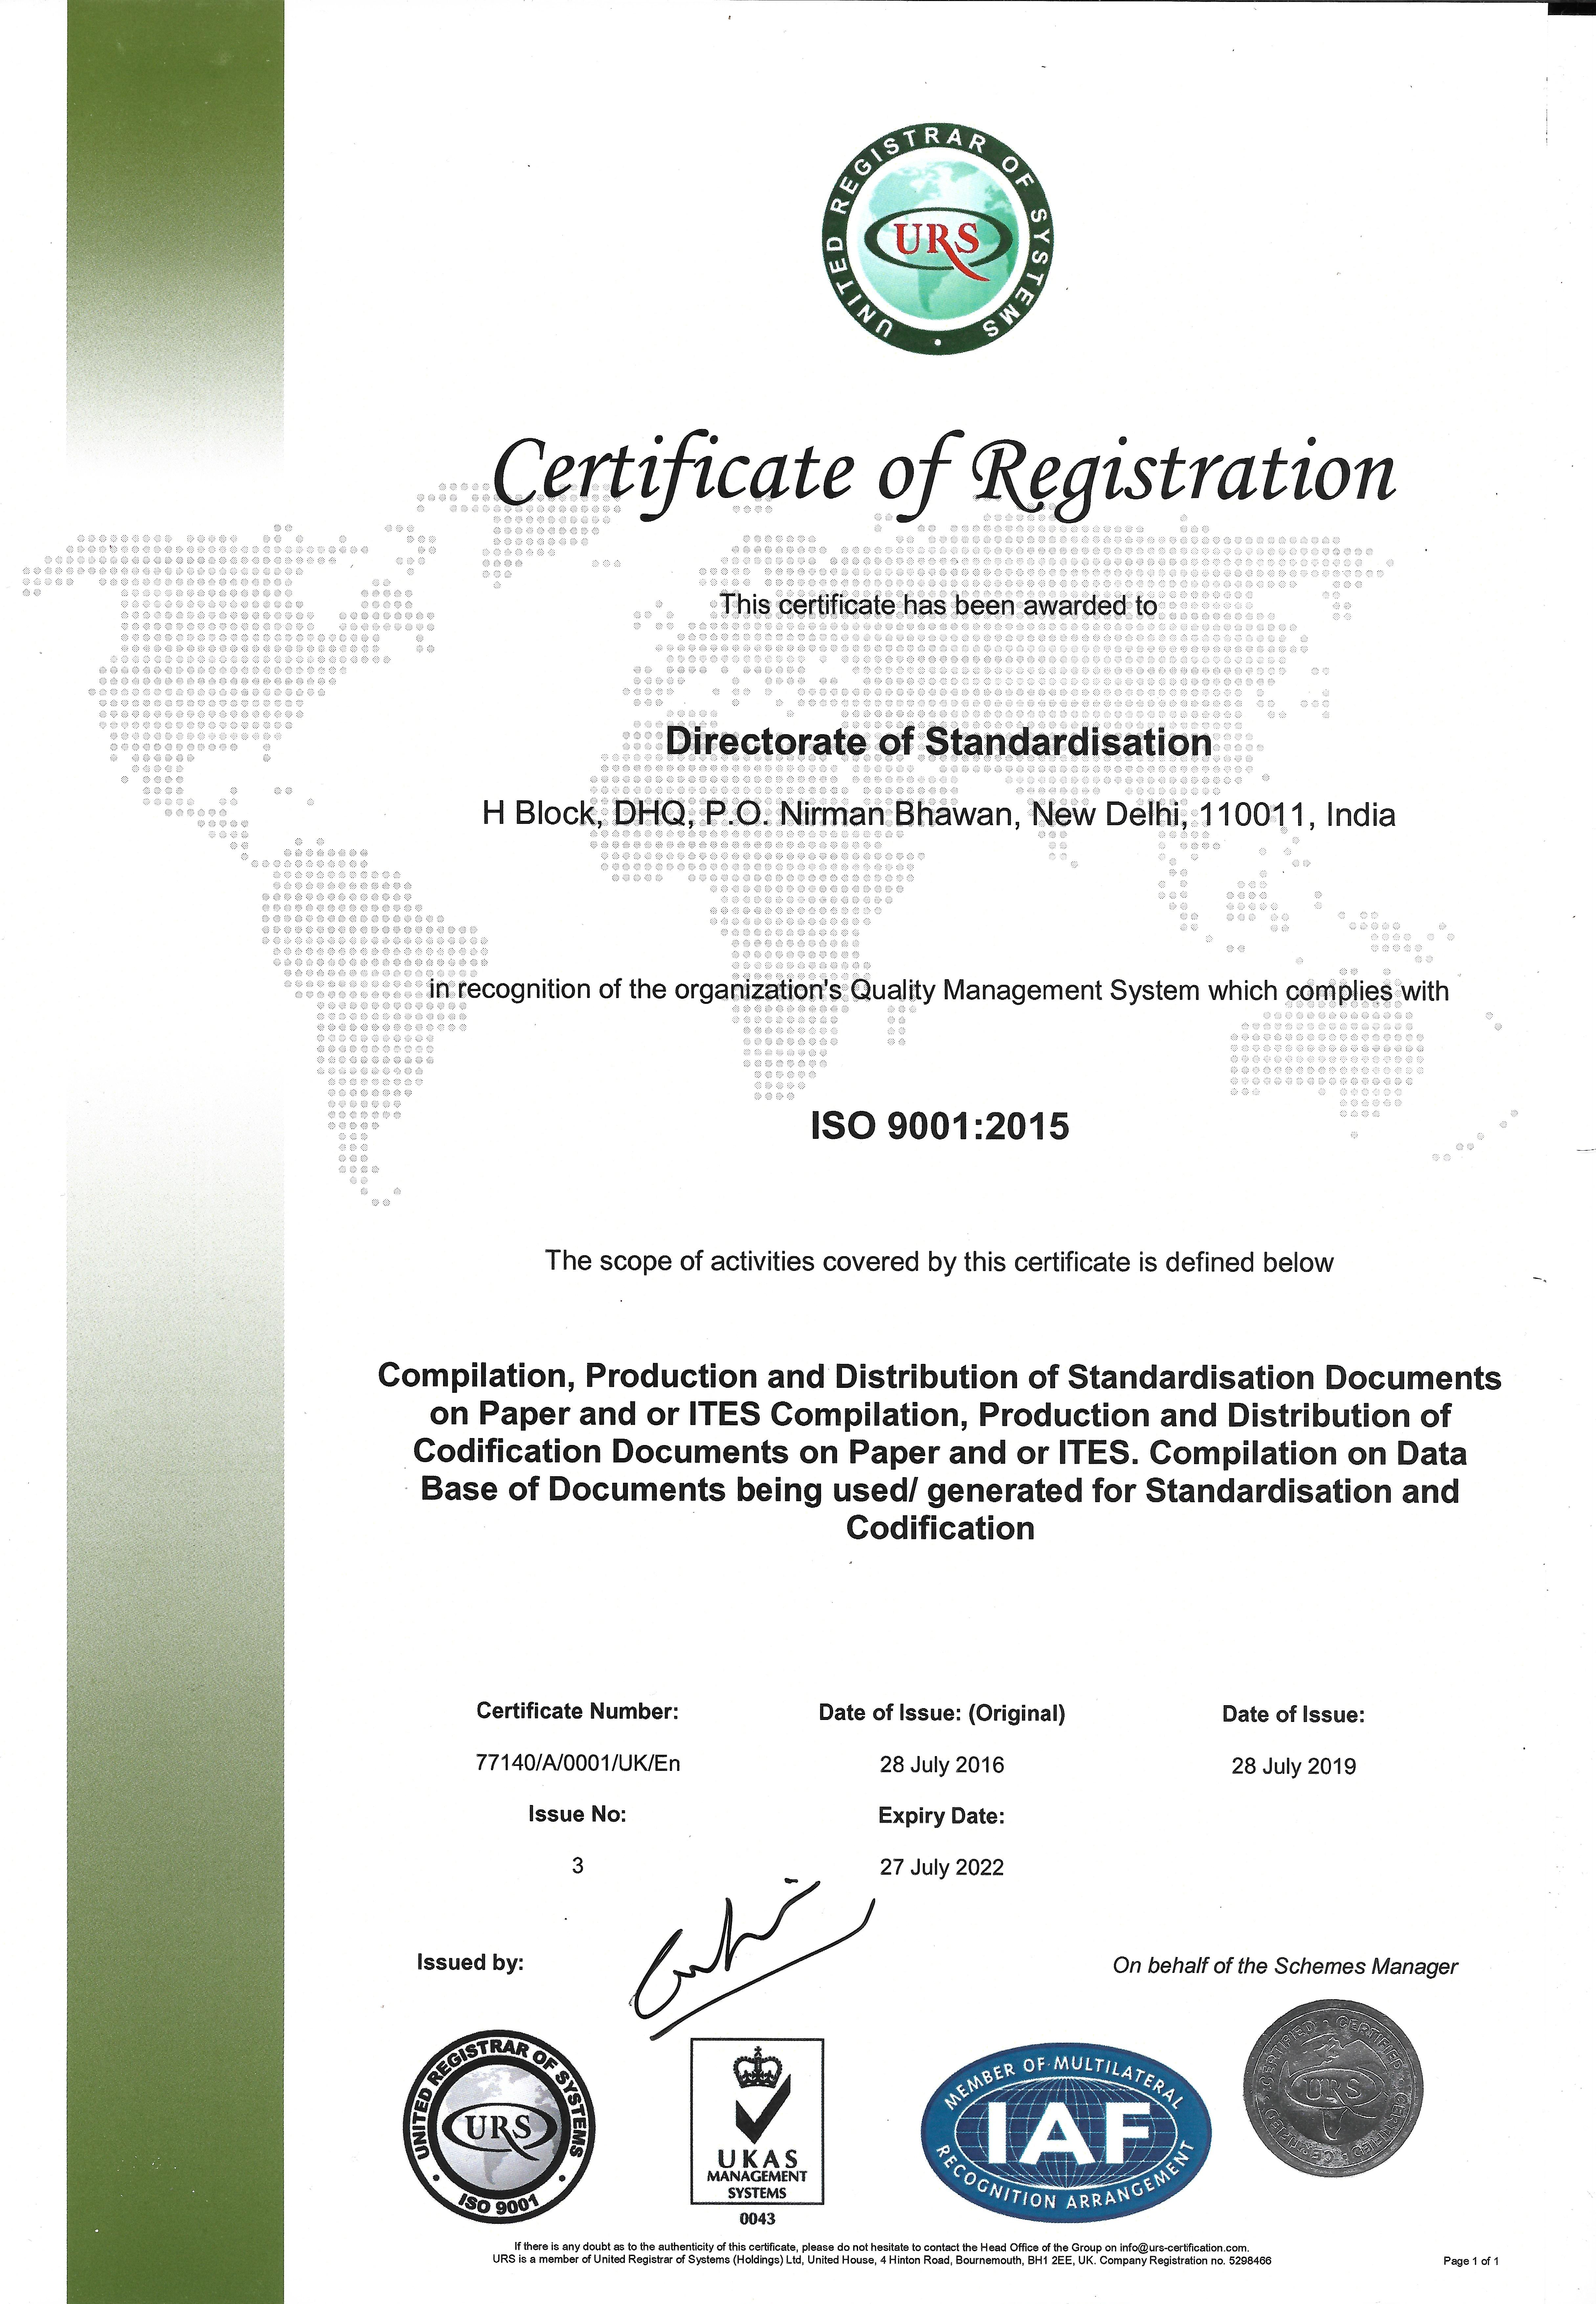 ISO Certification | Directorate of Standardisation